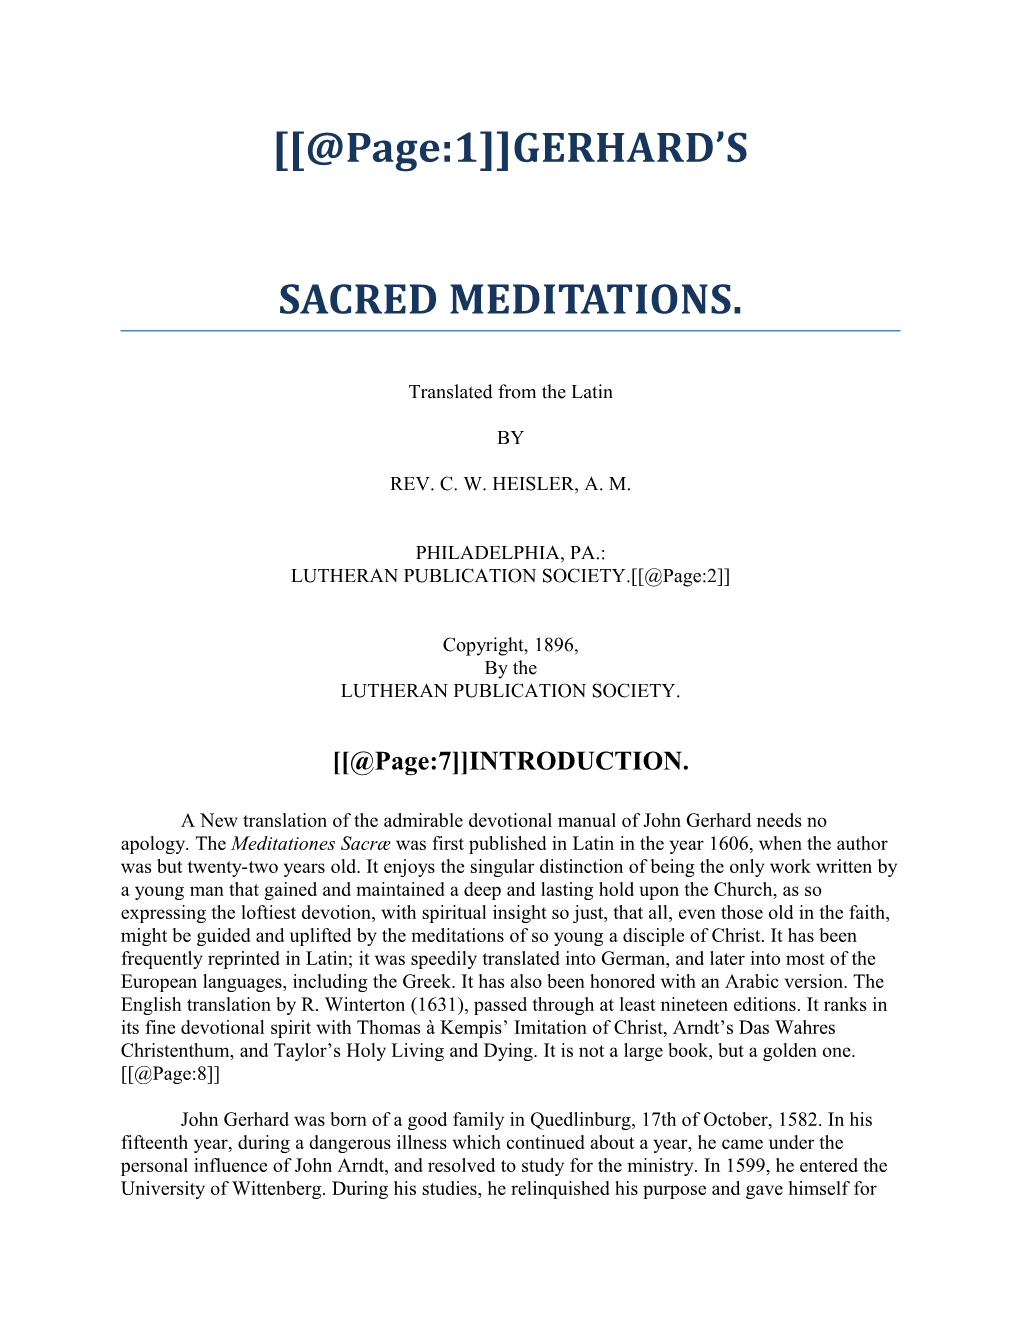 Gerhard's Sacred Meditations